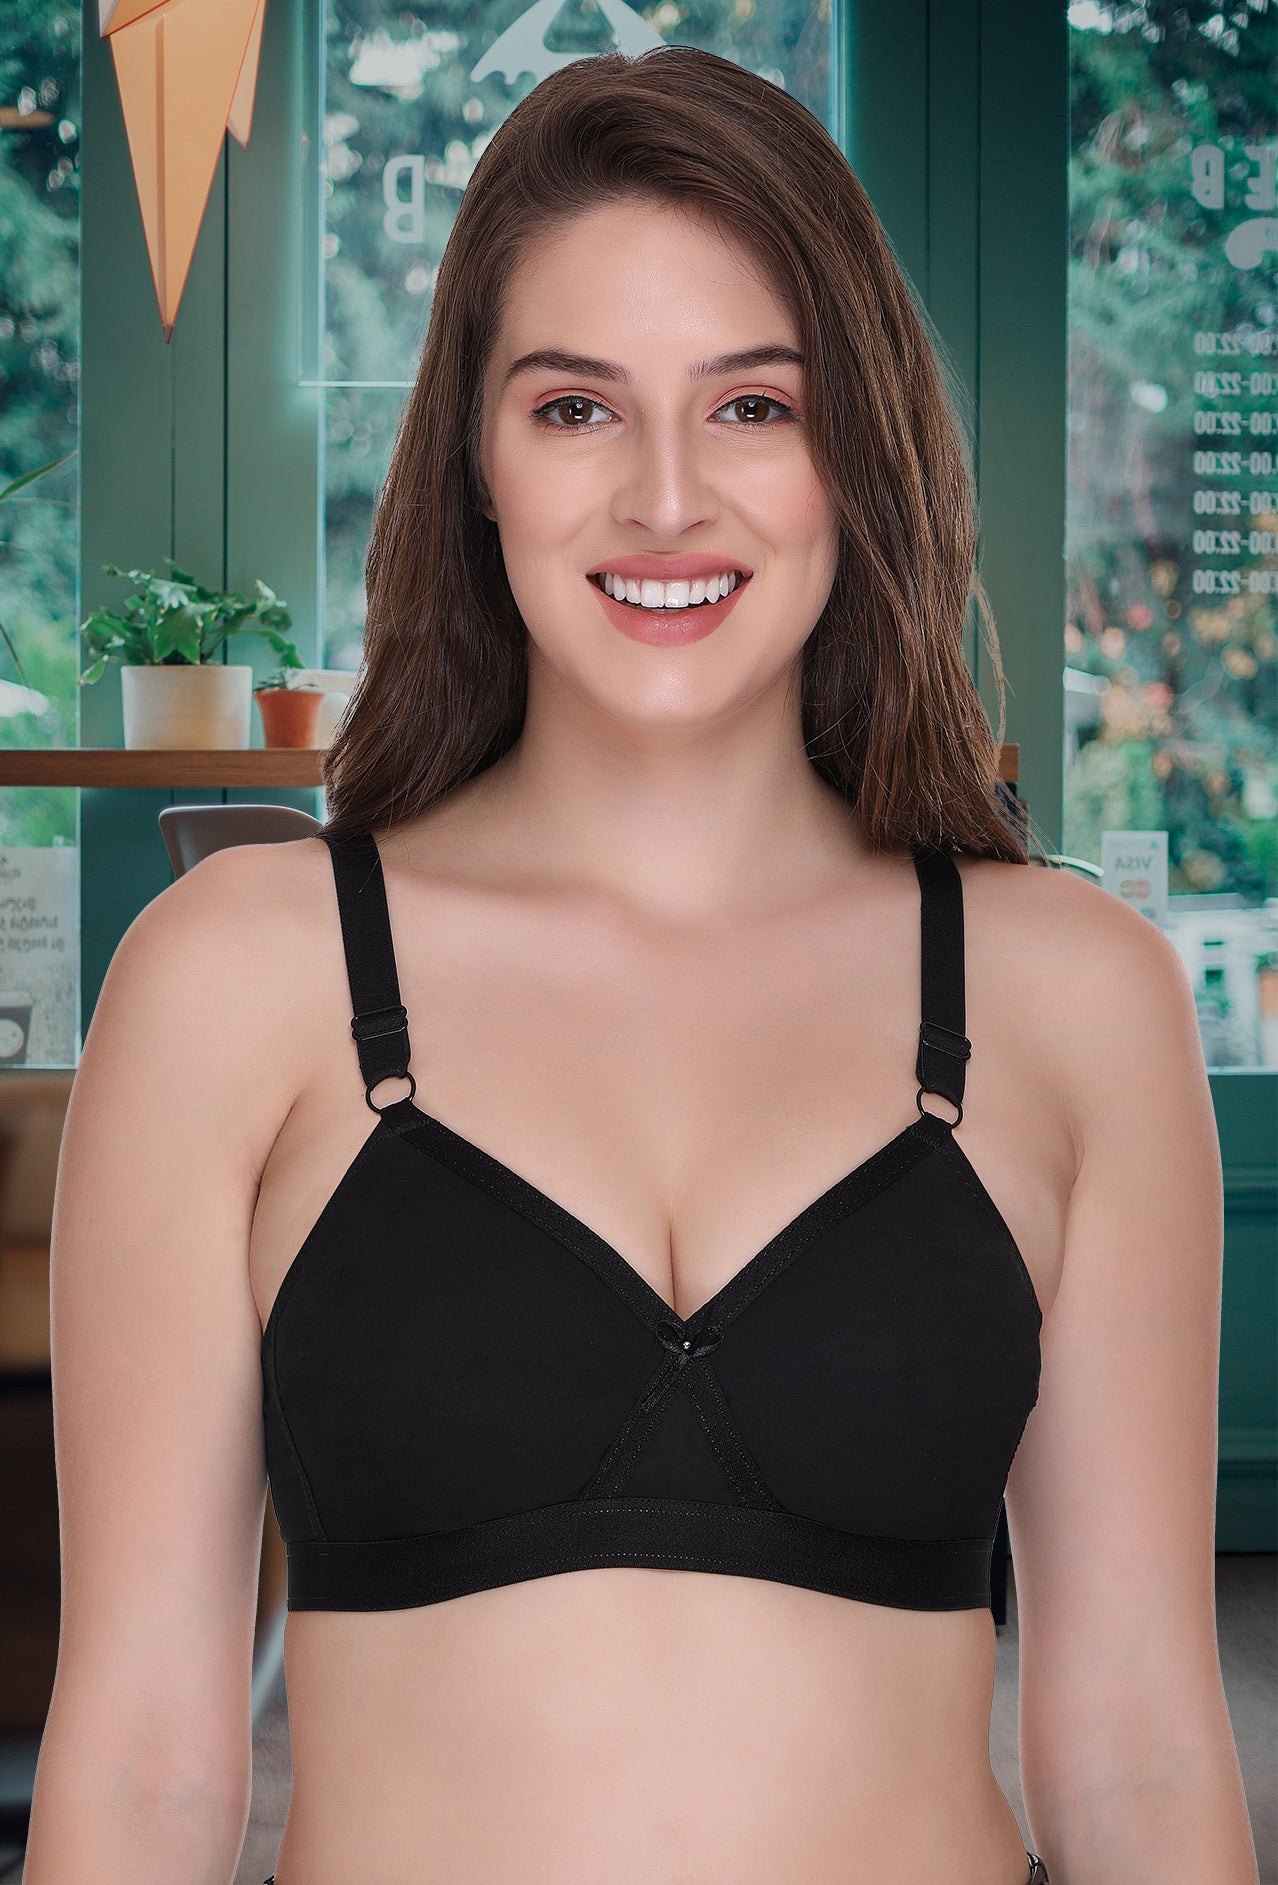 strapless bra - Buy strapless bra Online Starting at Just ₹142